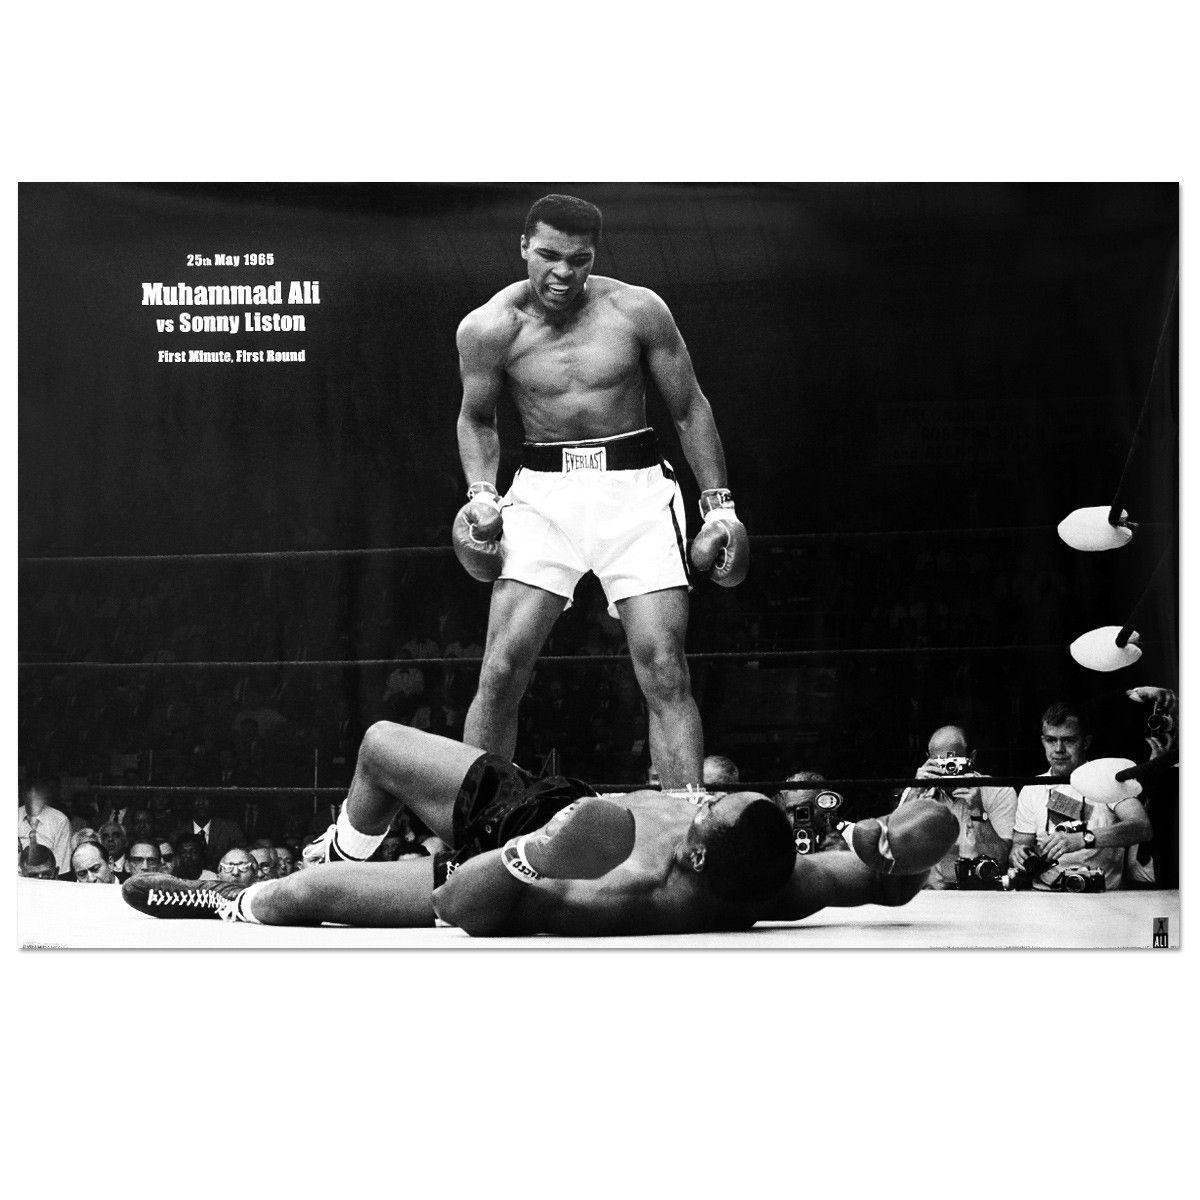 Wallpaper For > Muhammad Ali iPhone Wallpaper